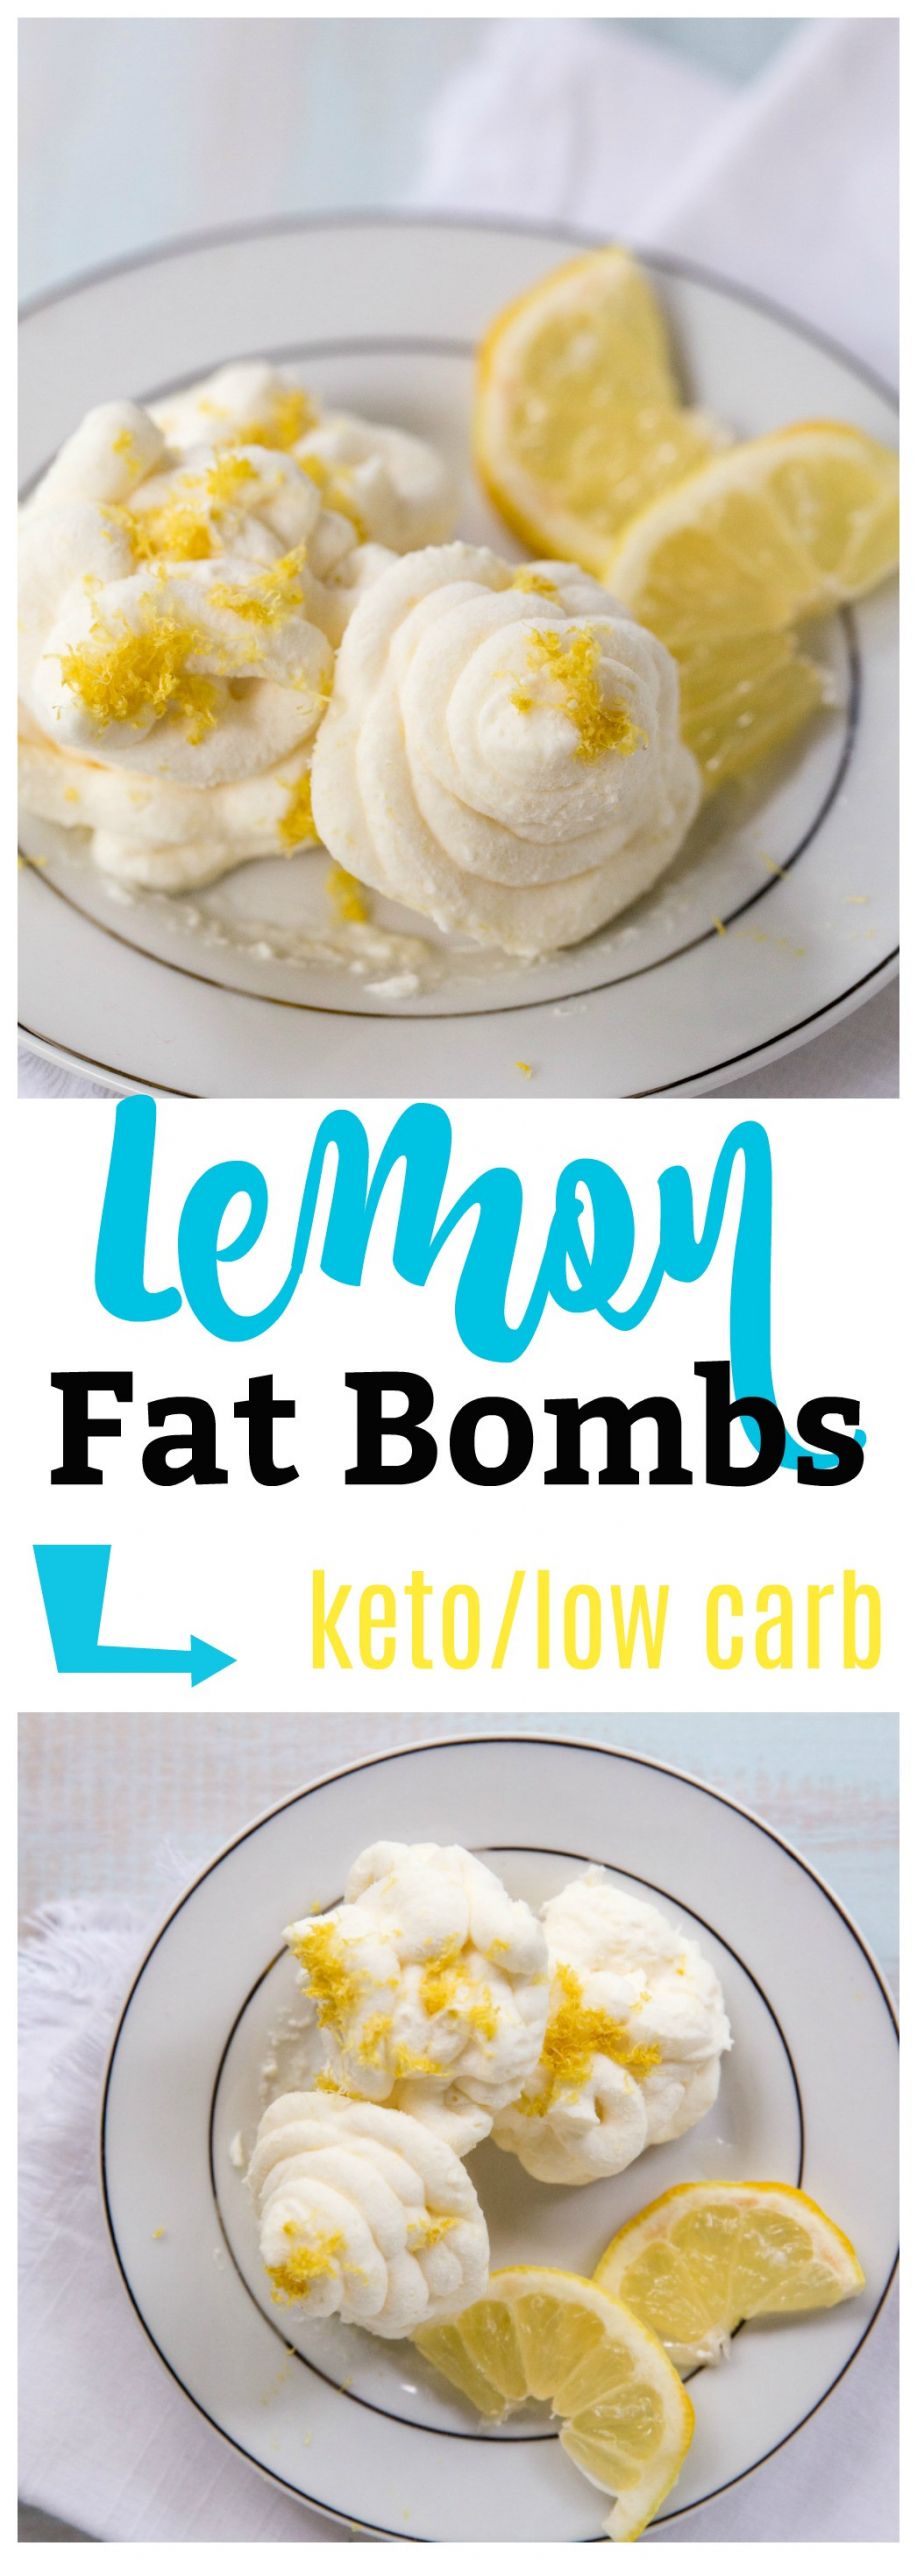 Low Fat Keto Recipes Easy Lemon Keto Bomb Recipe Low Carb Friendly